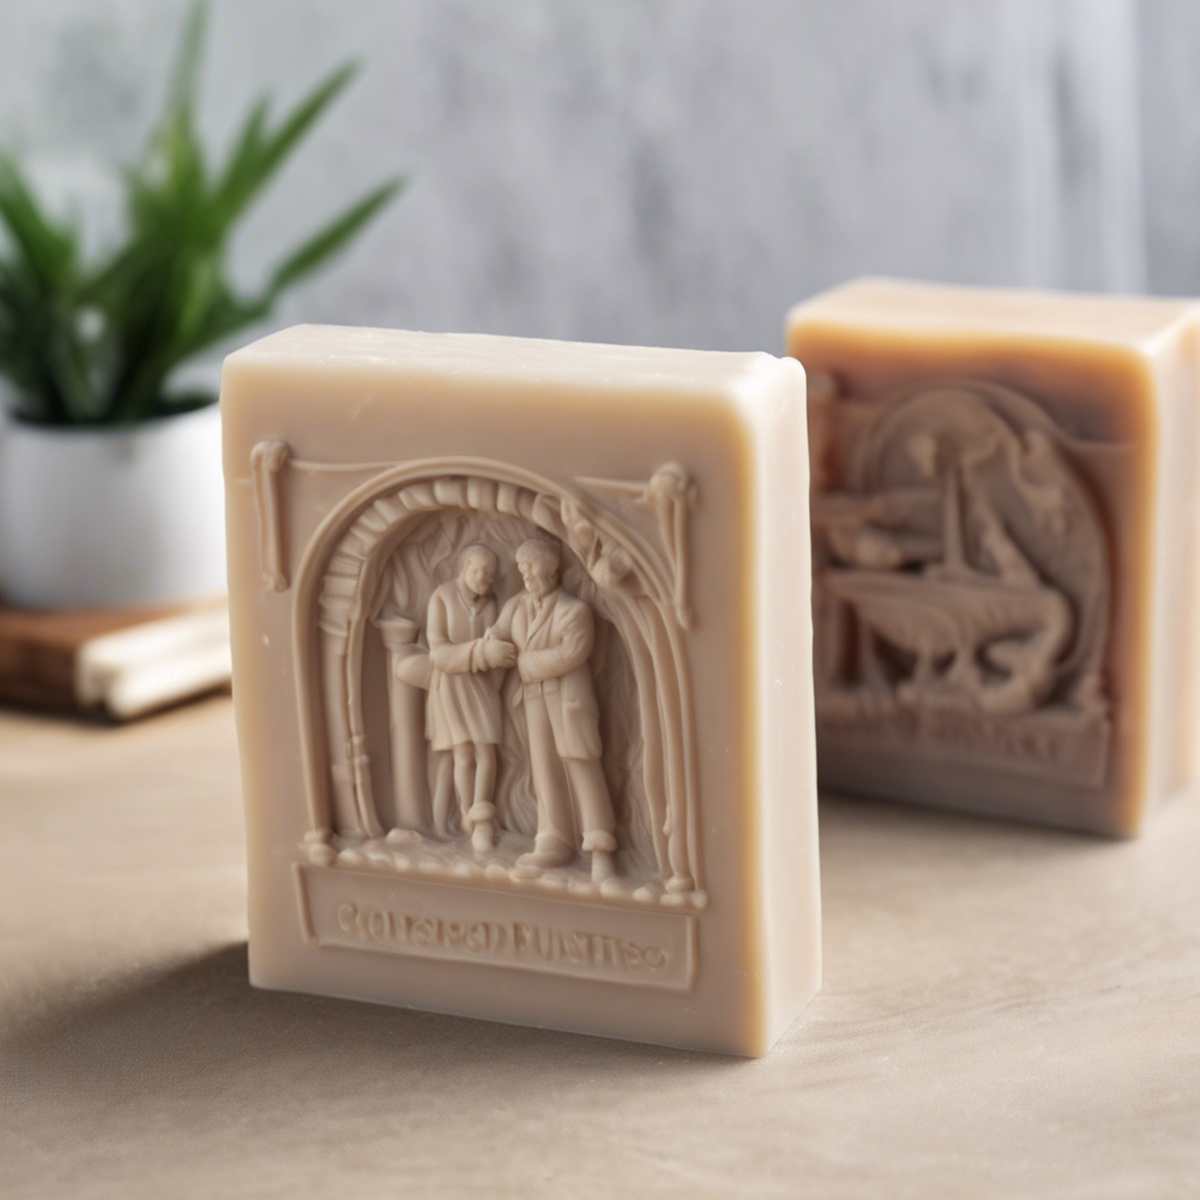 custom made soap molds